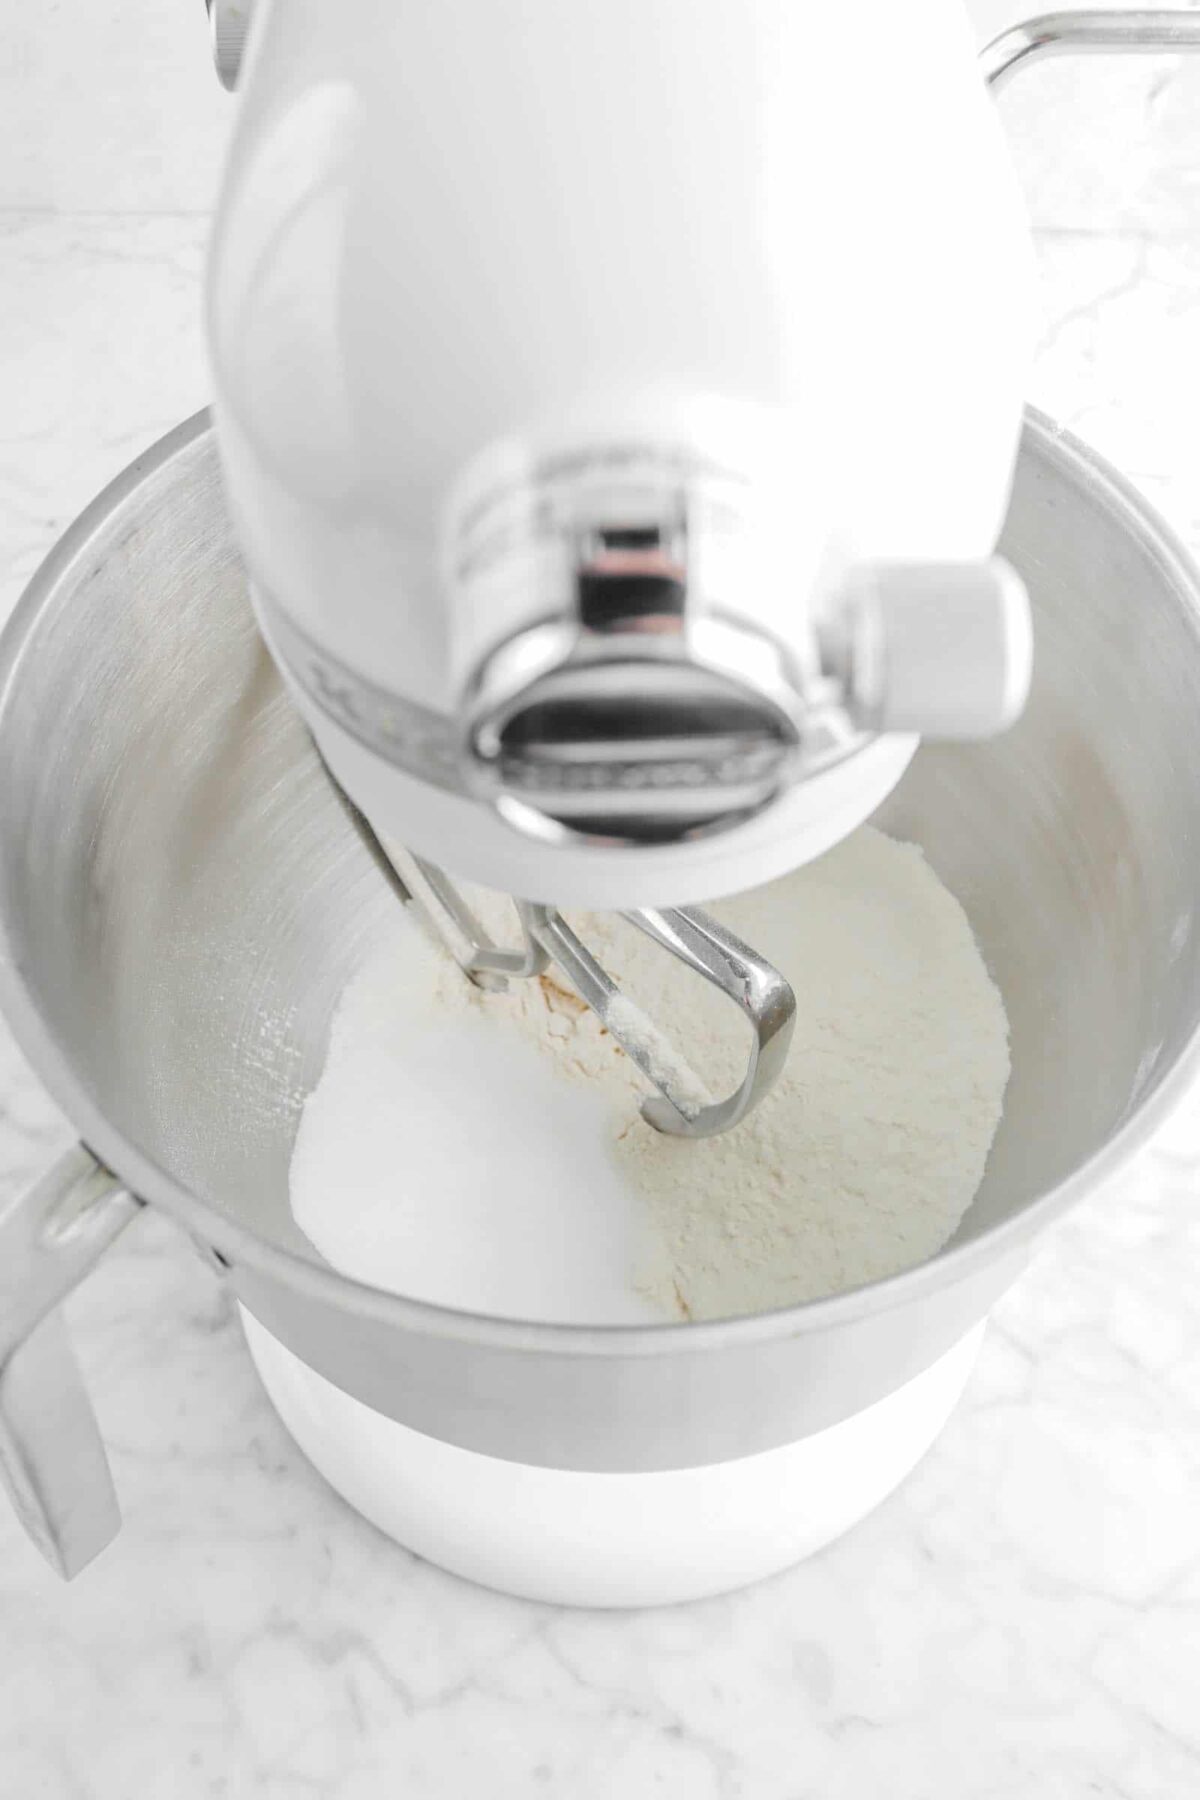 flour and sugar in a mixer